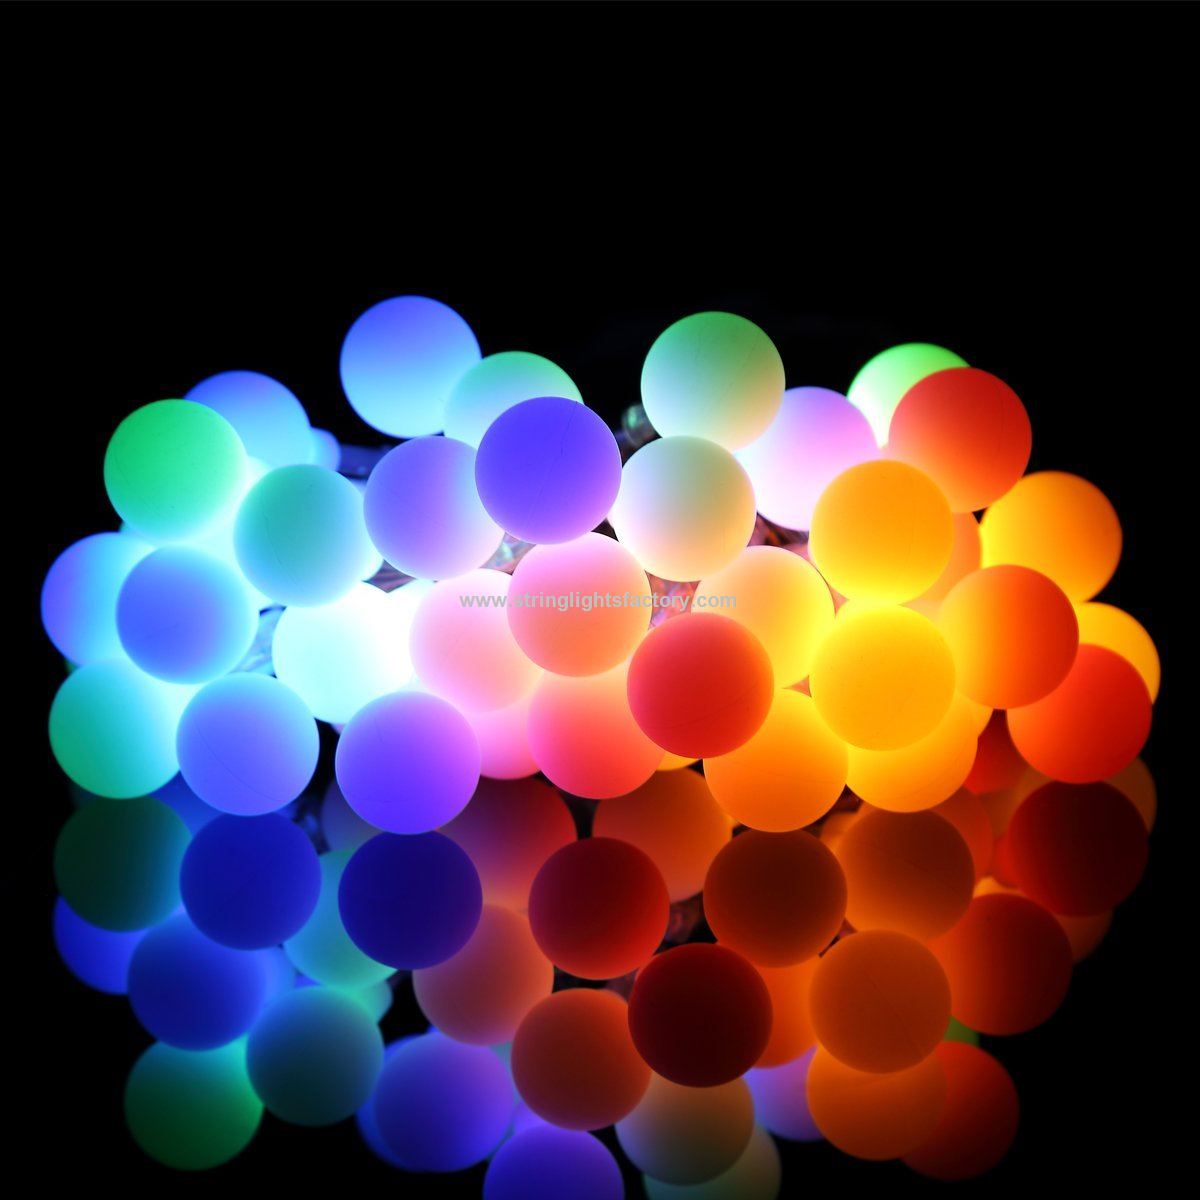 Decorative Globe String Lights Colorful 50 LED Bulbs 16 feet Length